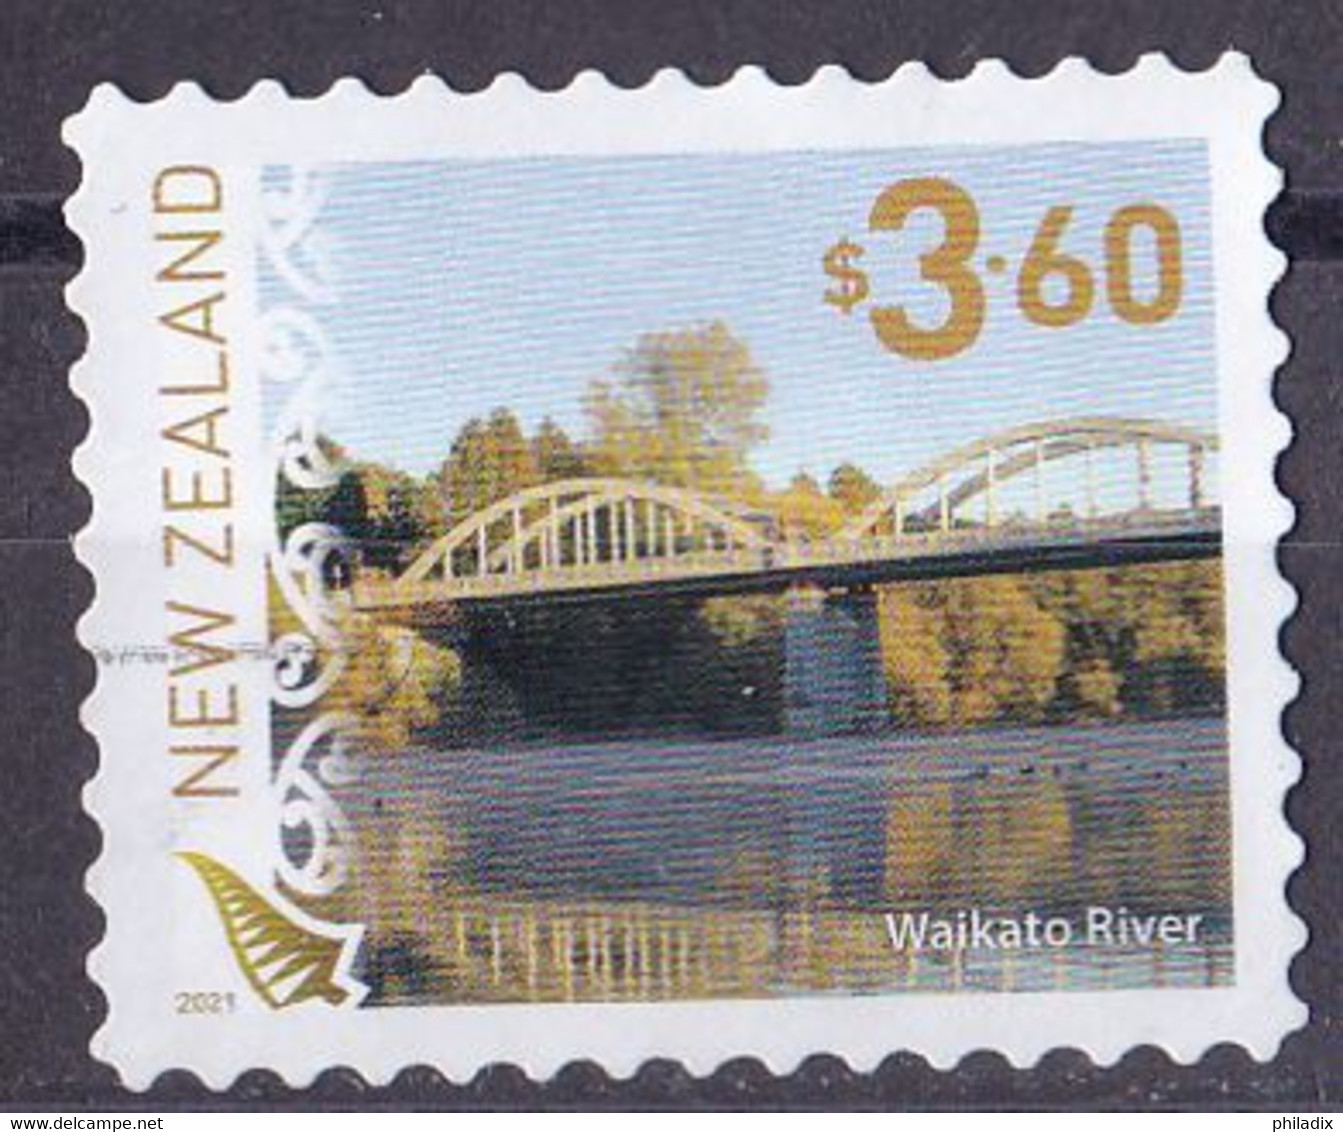 Neuseeland Marke Von 2021 O/used (A2-5) - Oblitérés